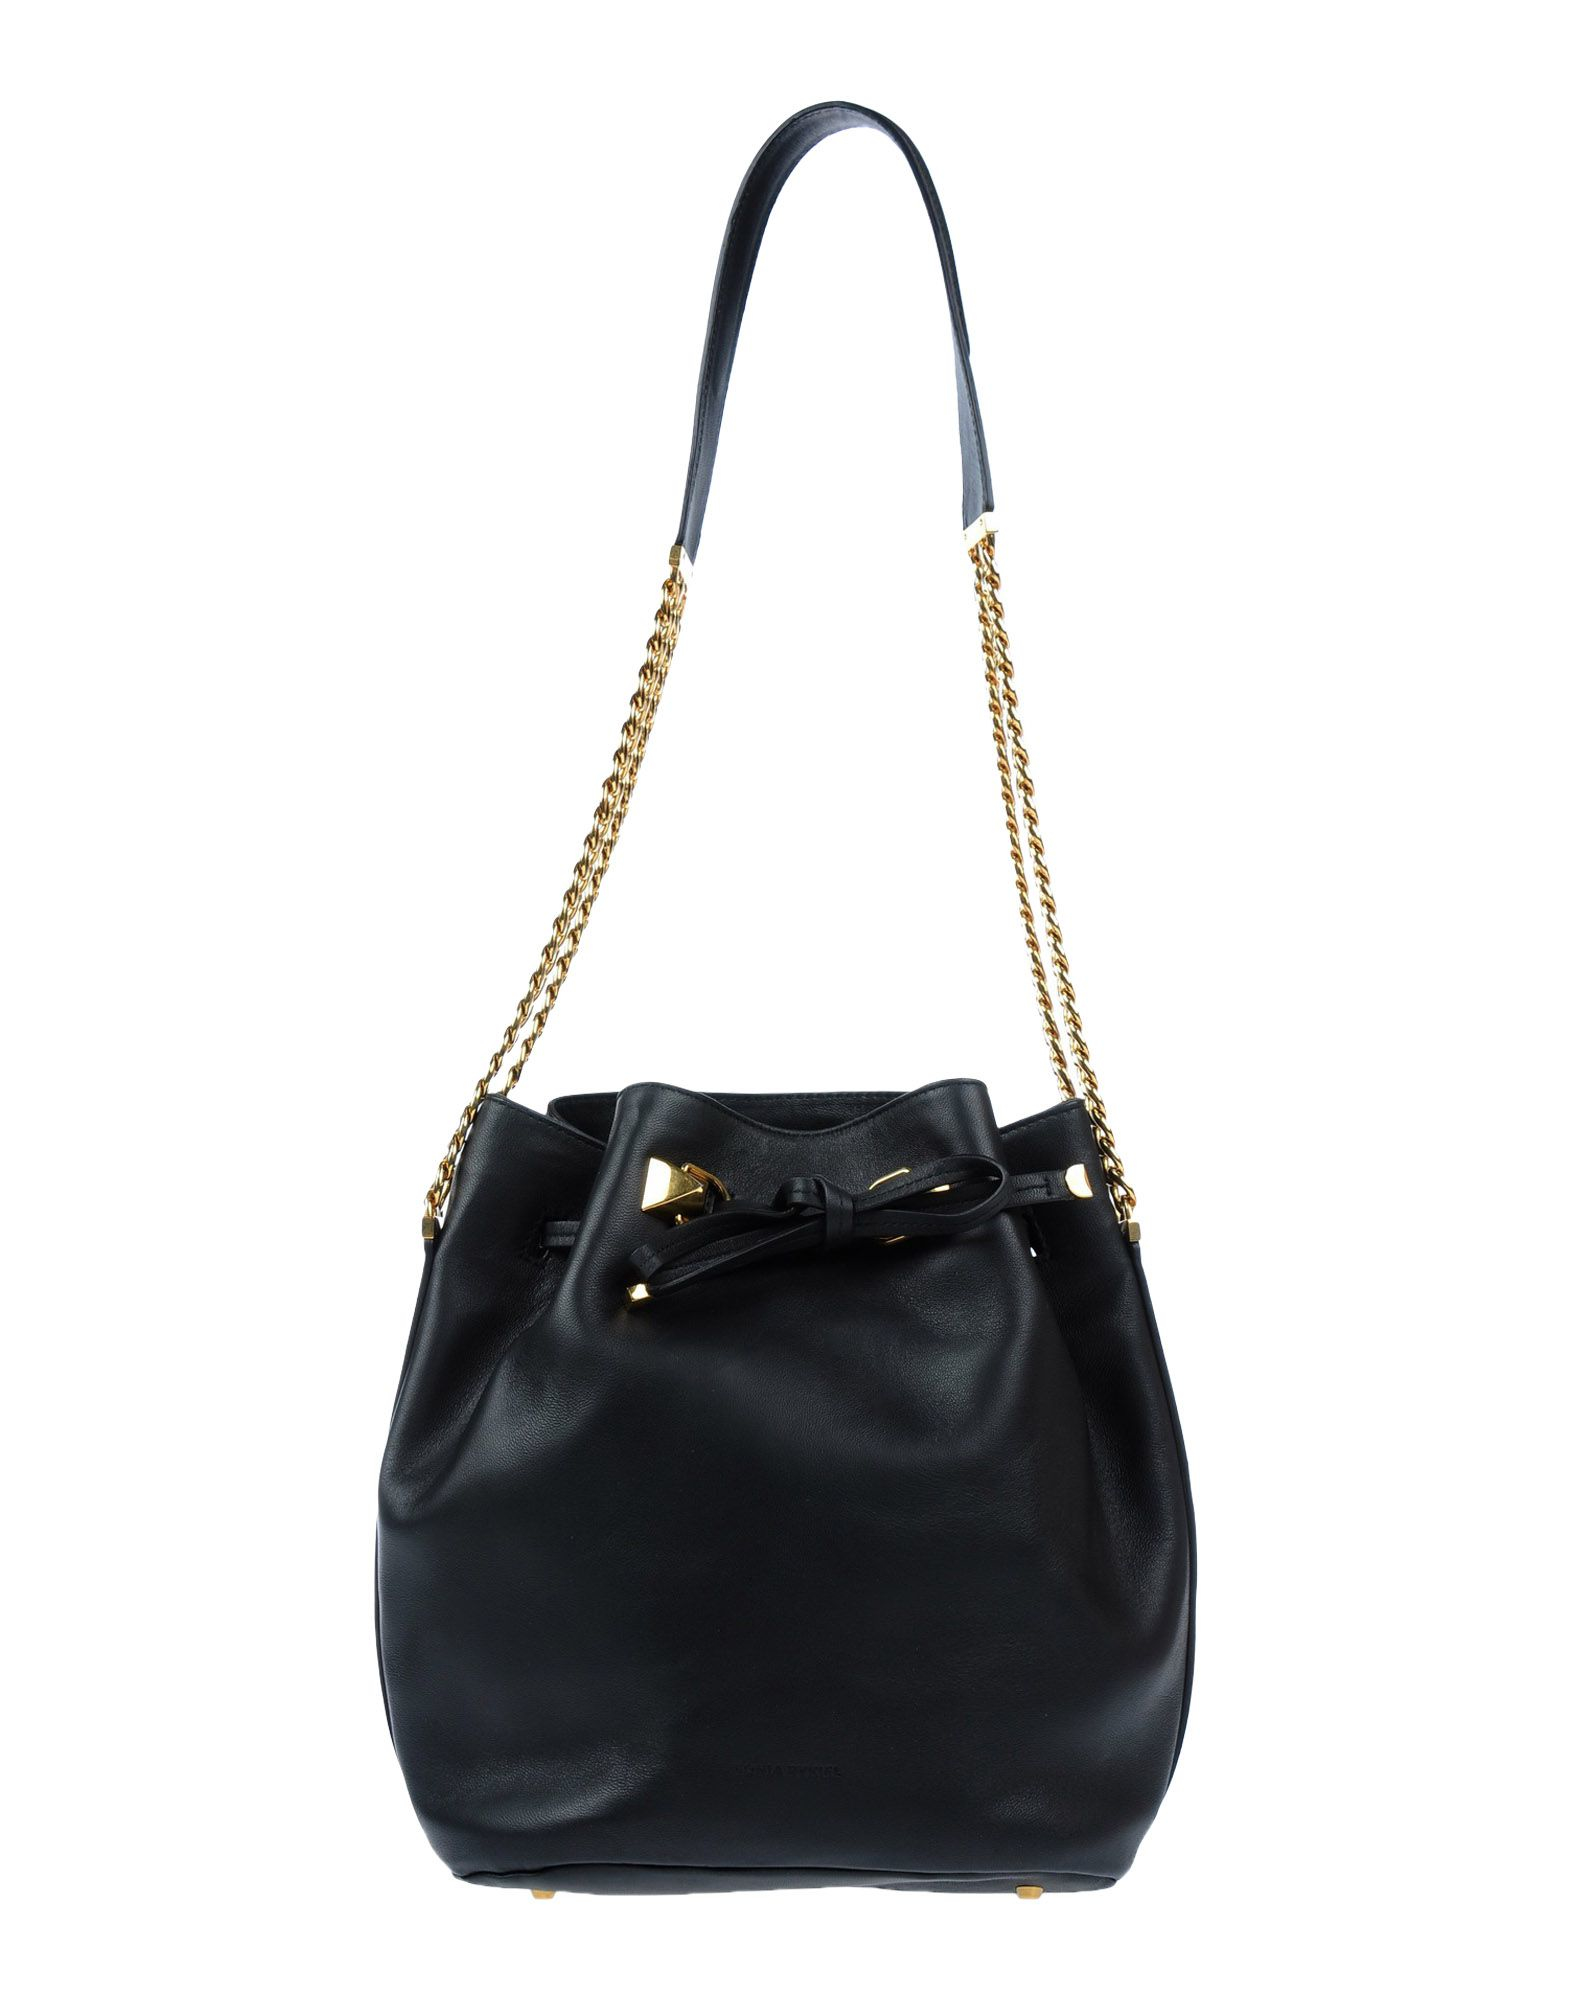 Lyst - Sonia Rykiel Shoulder Bag in Black